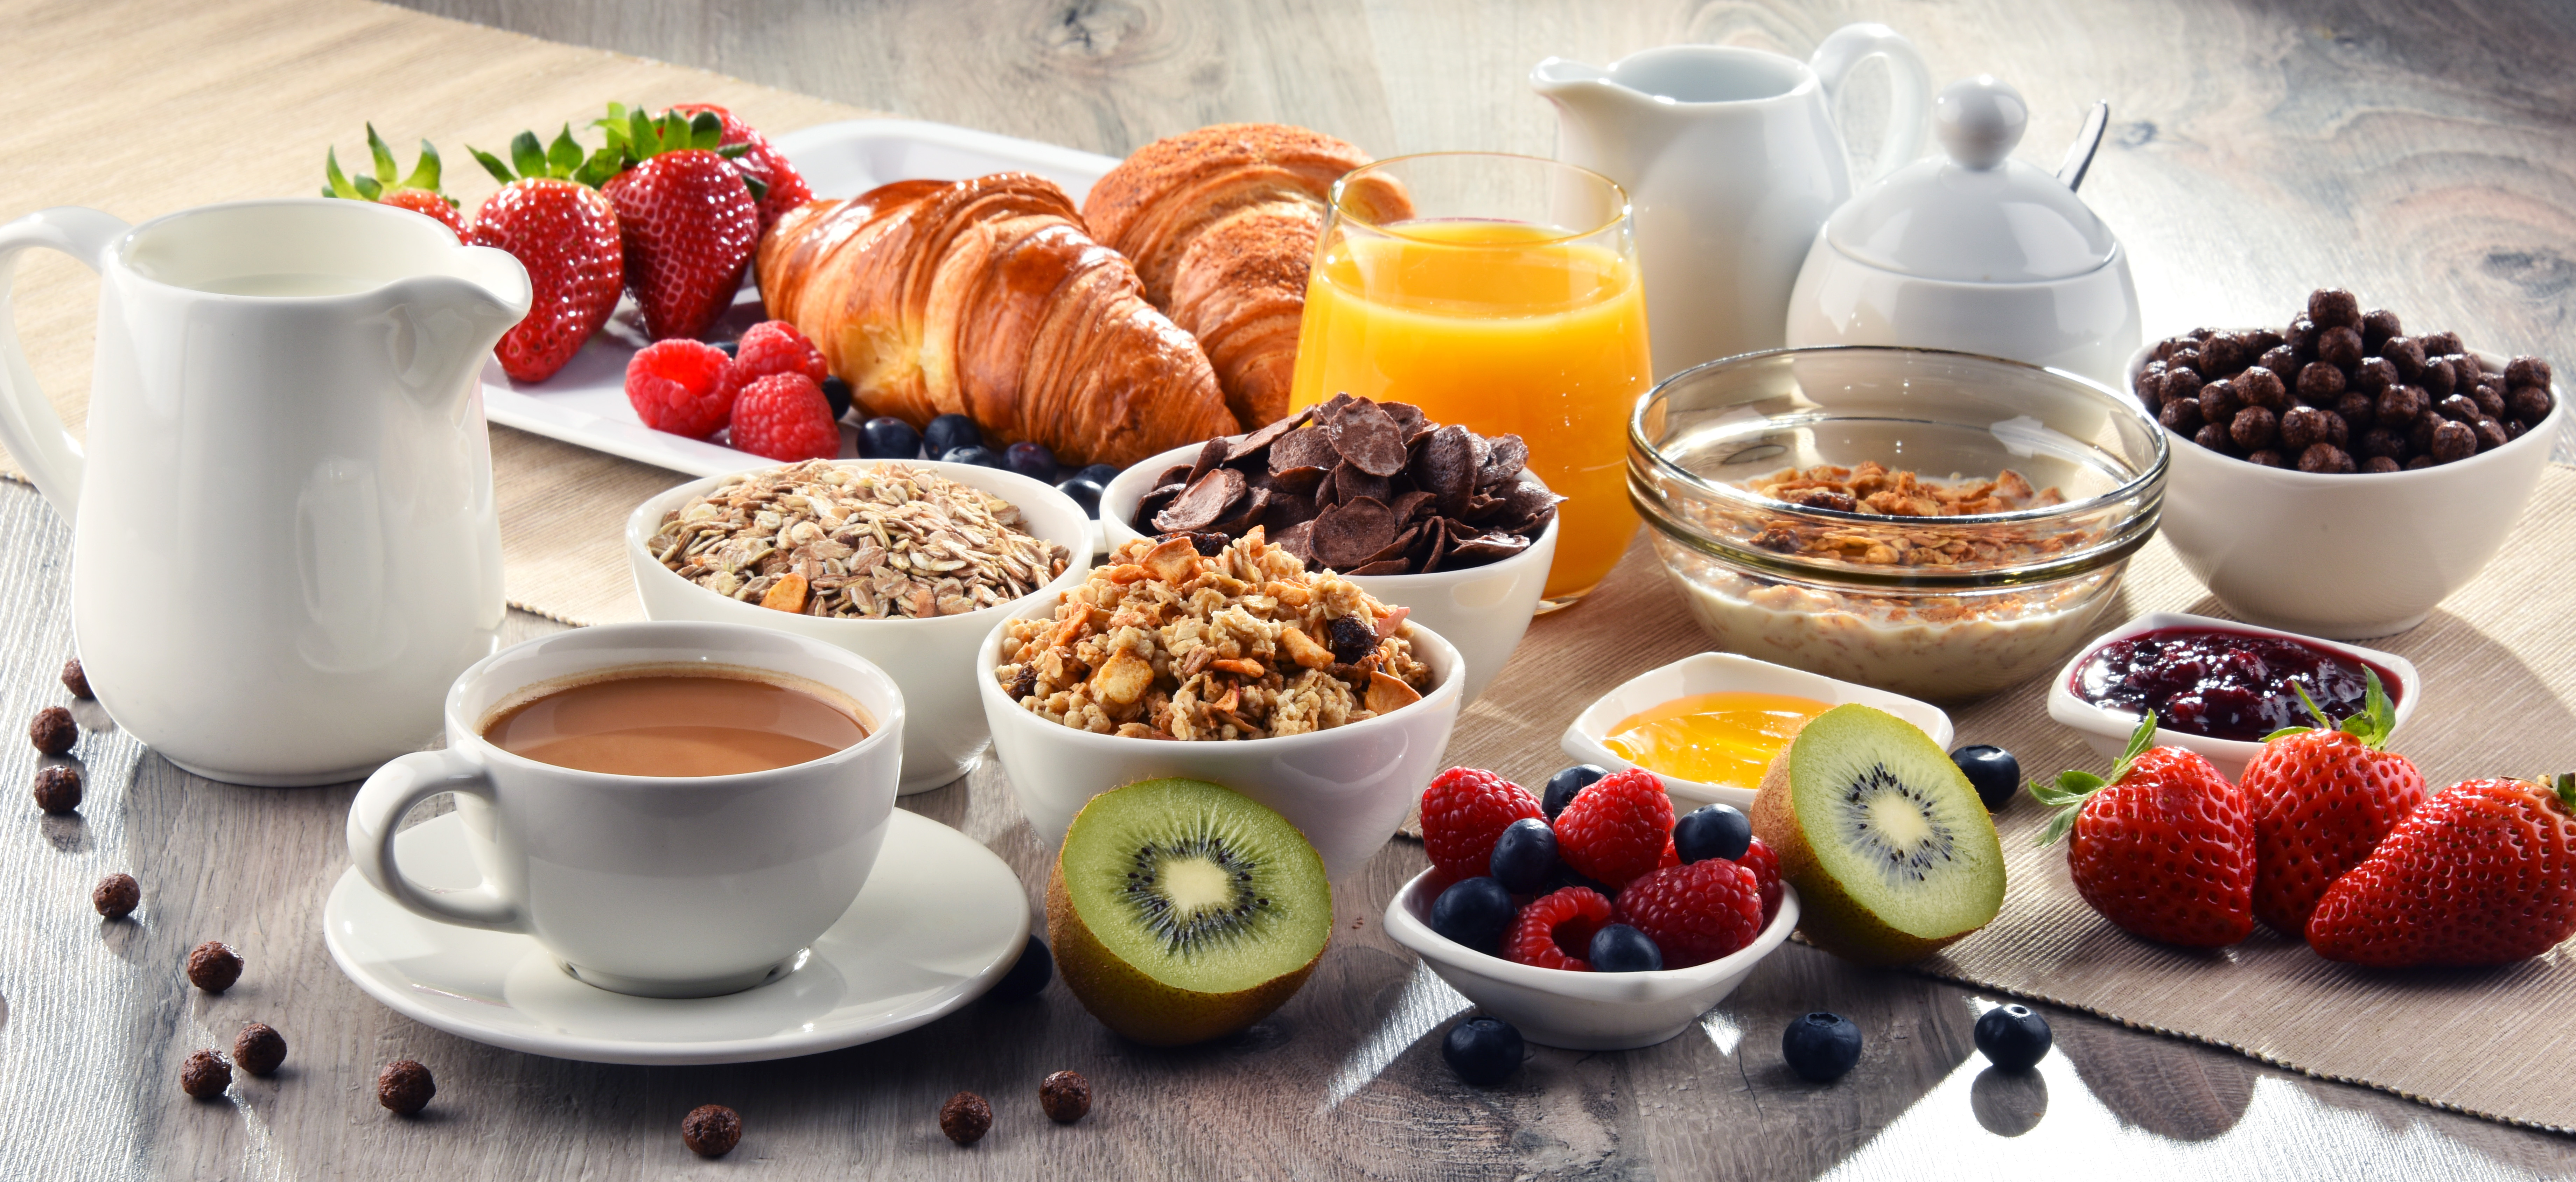 Montaje de desayuno continental | Foto: Shutterstock